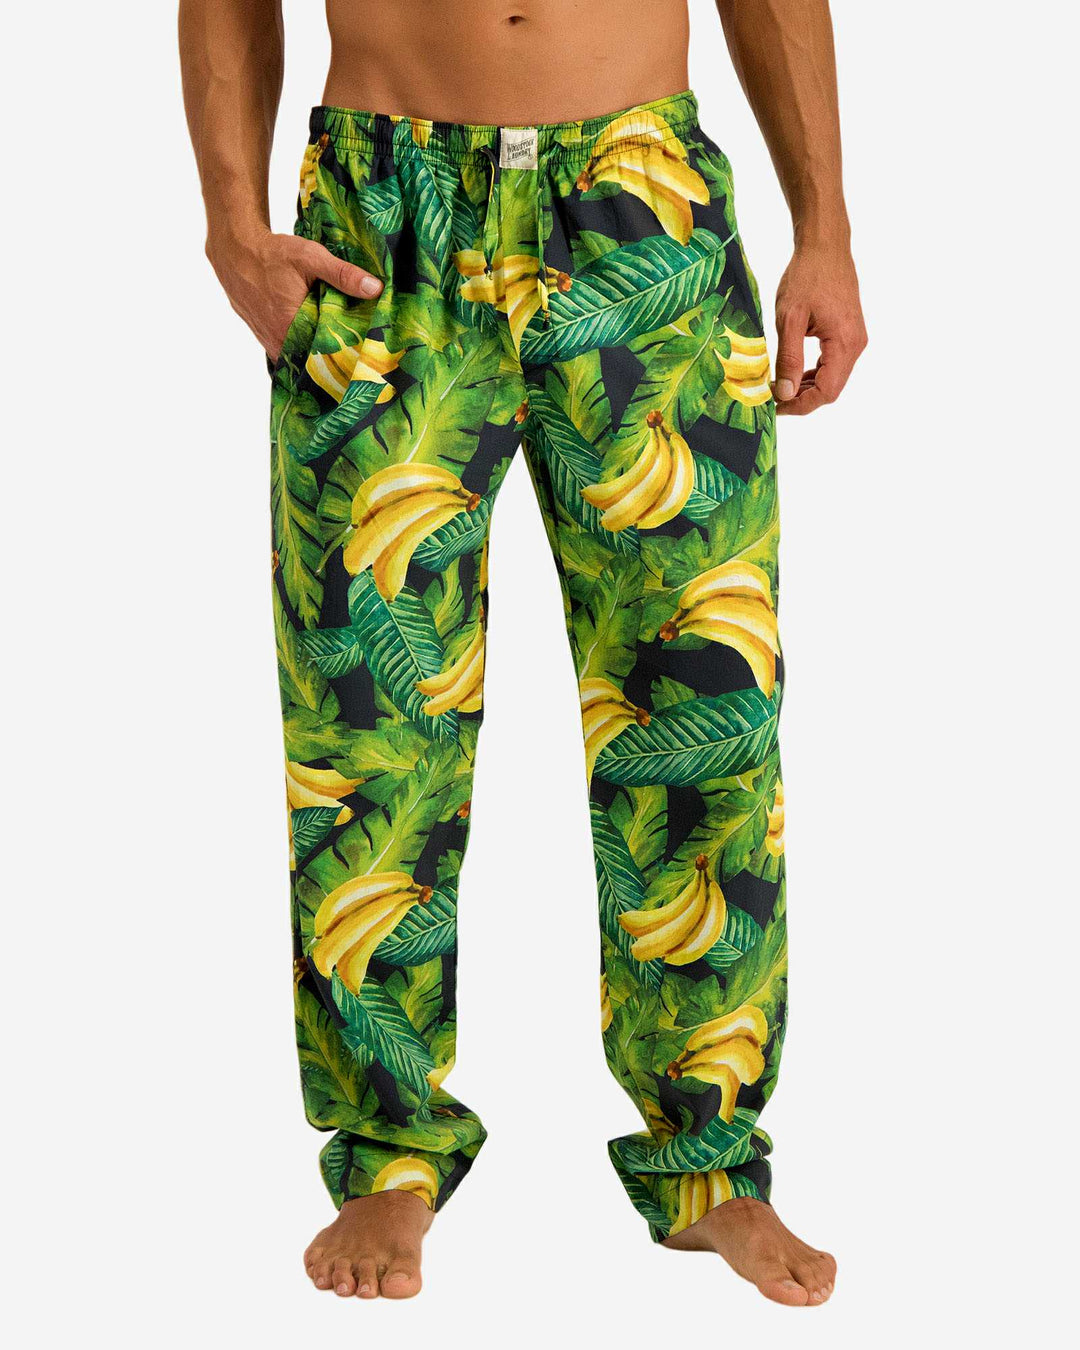 Mens PJ pants - banana on leaves